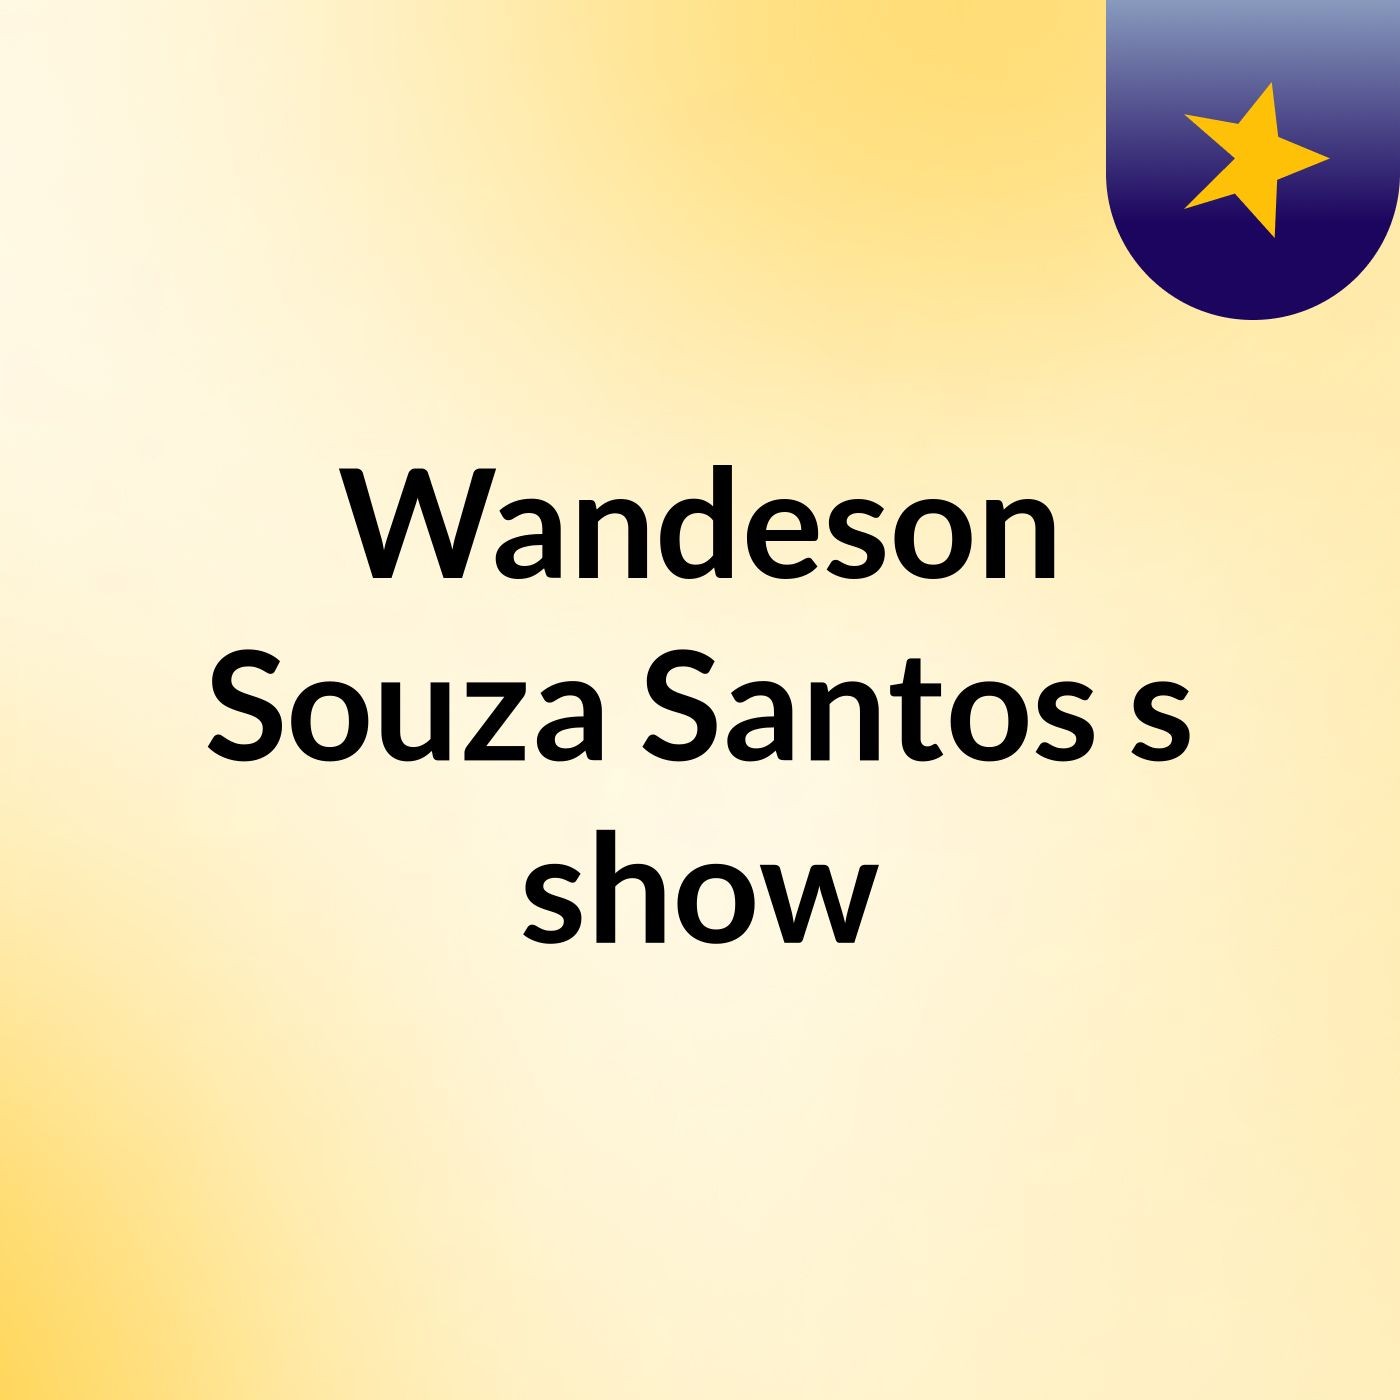 Wandeson Souza Santos's show